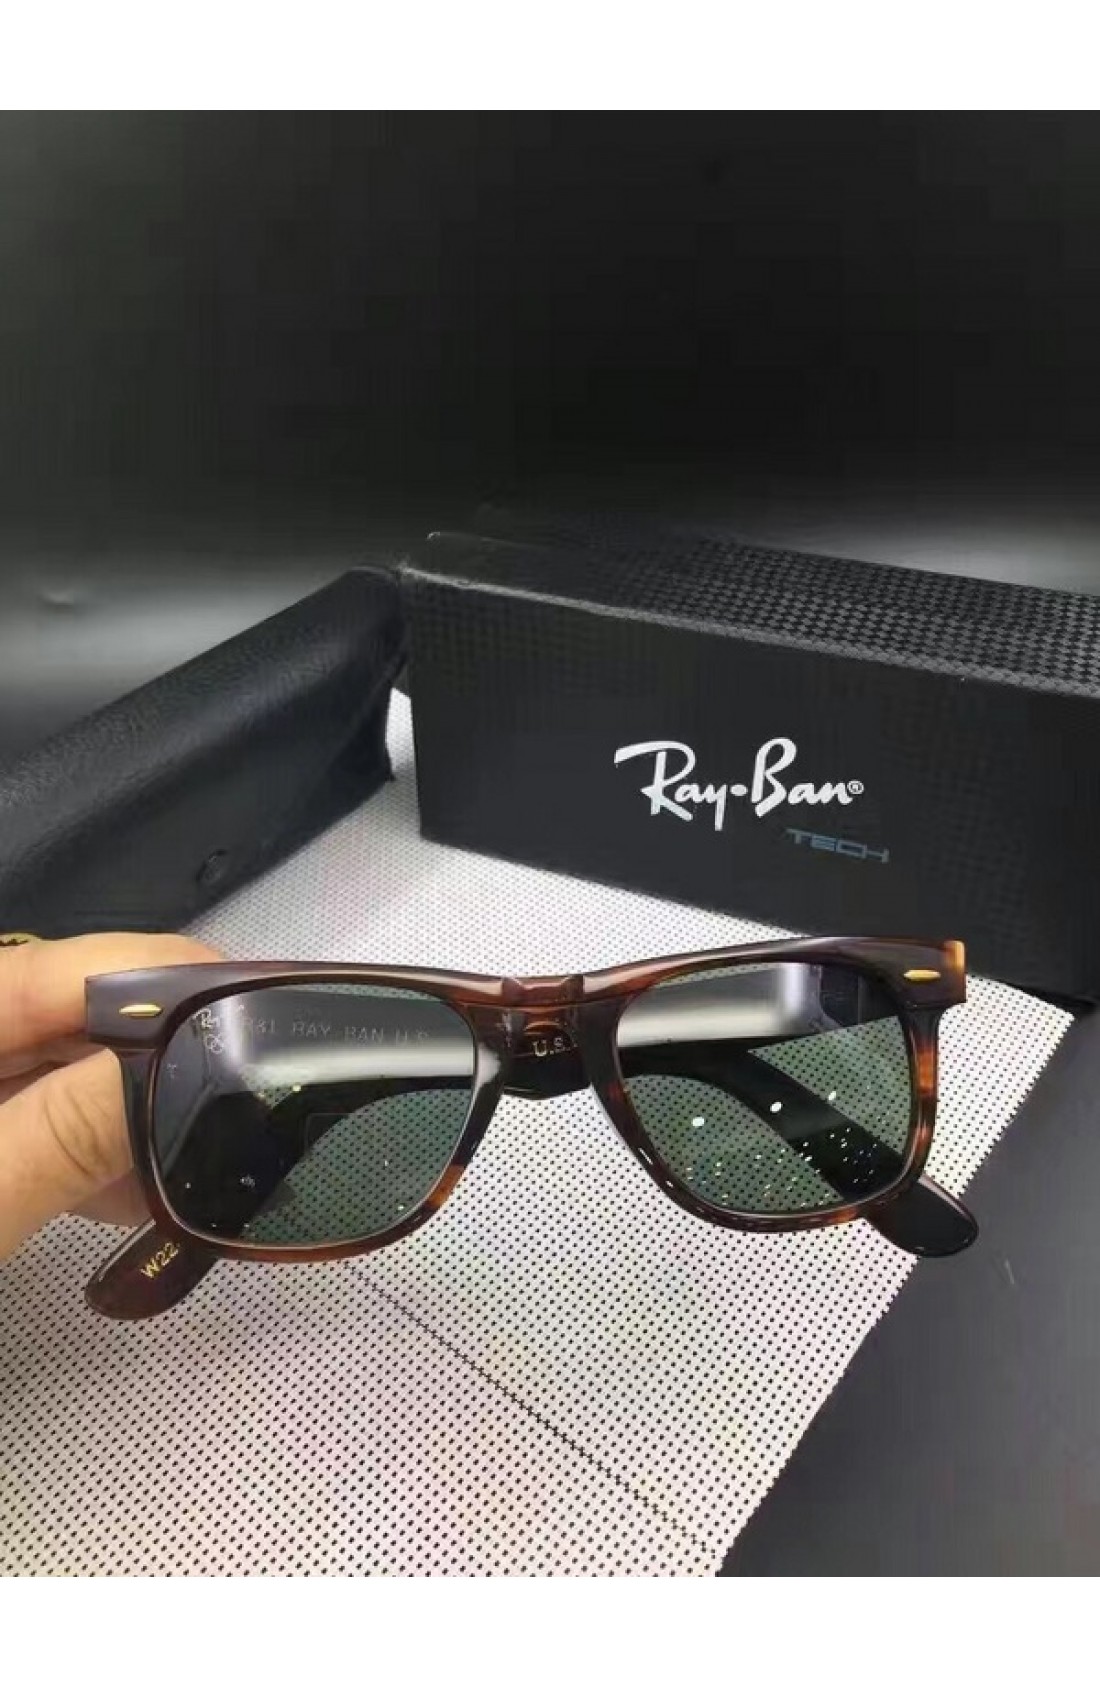 Ray Ban W2244 Wayfarer Sunglasses Brown